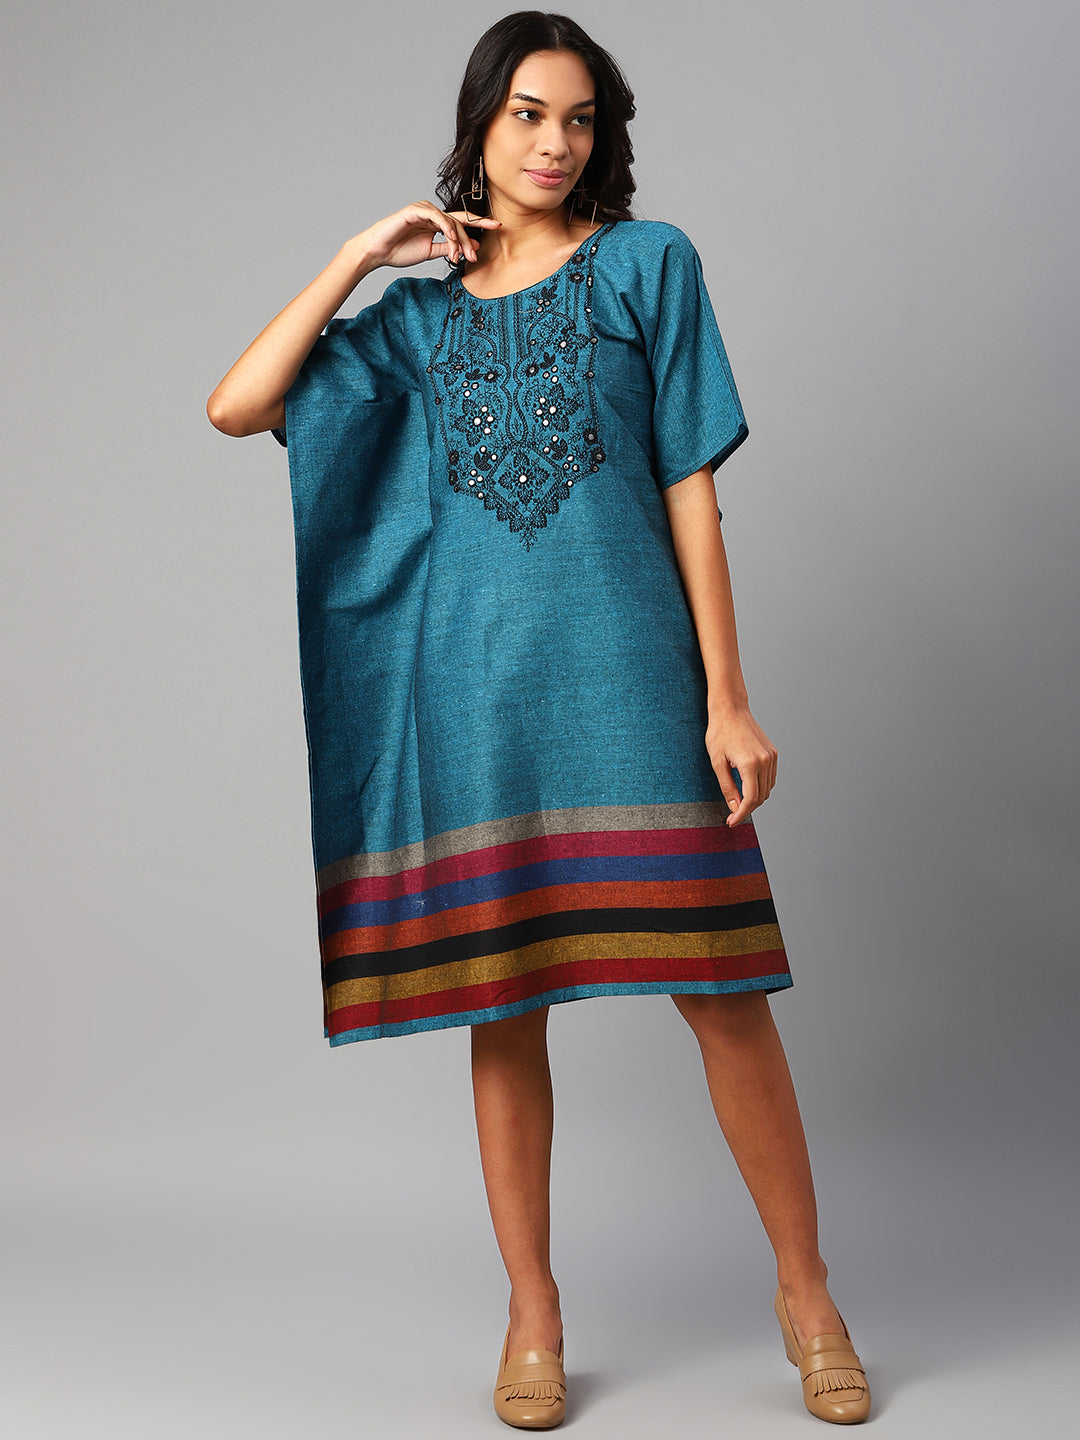 Blue Ethnic Motifs Embroidered Kaftan Dress